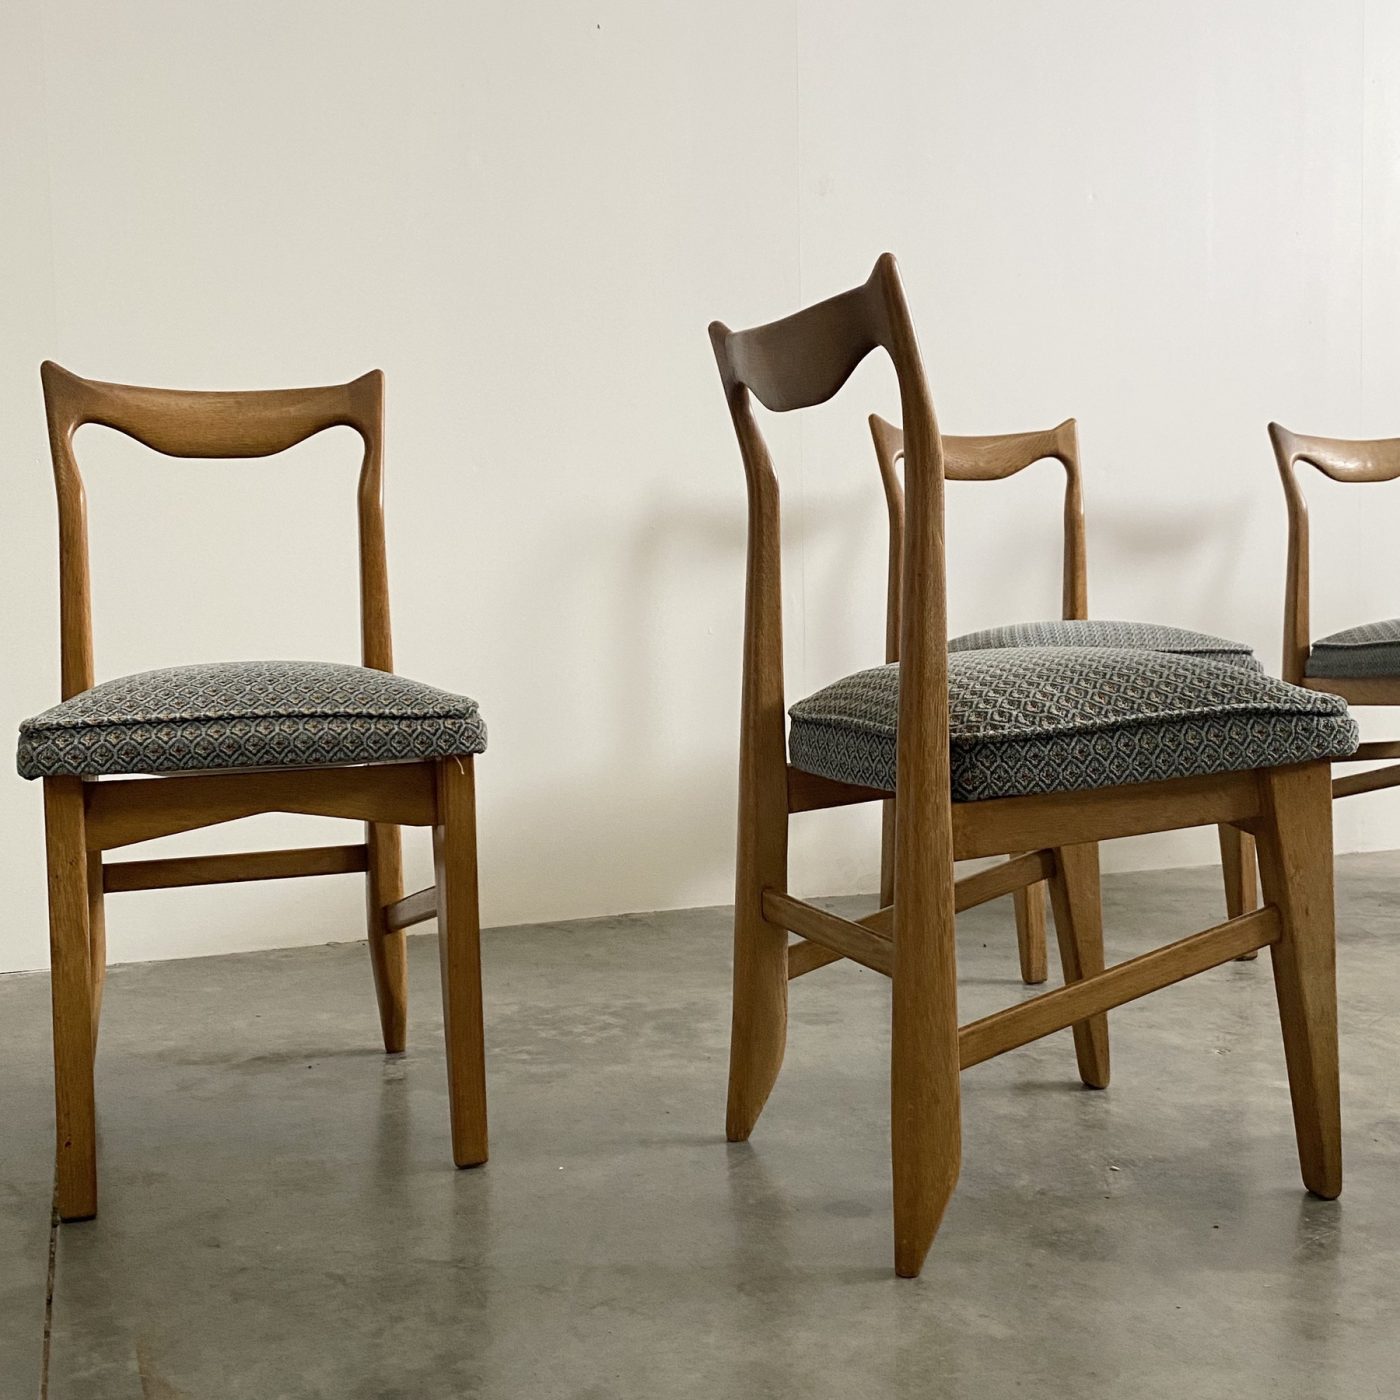 objet-vagabond-midcentury-chairs0001